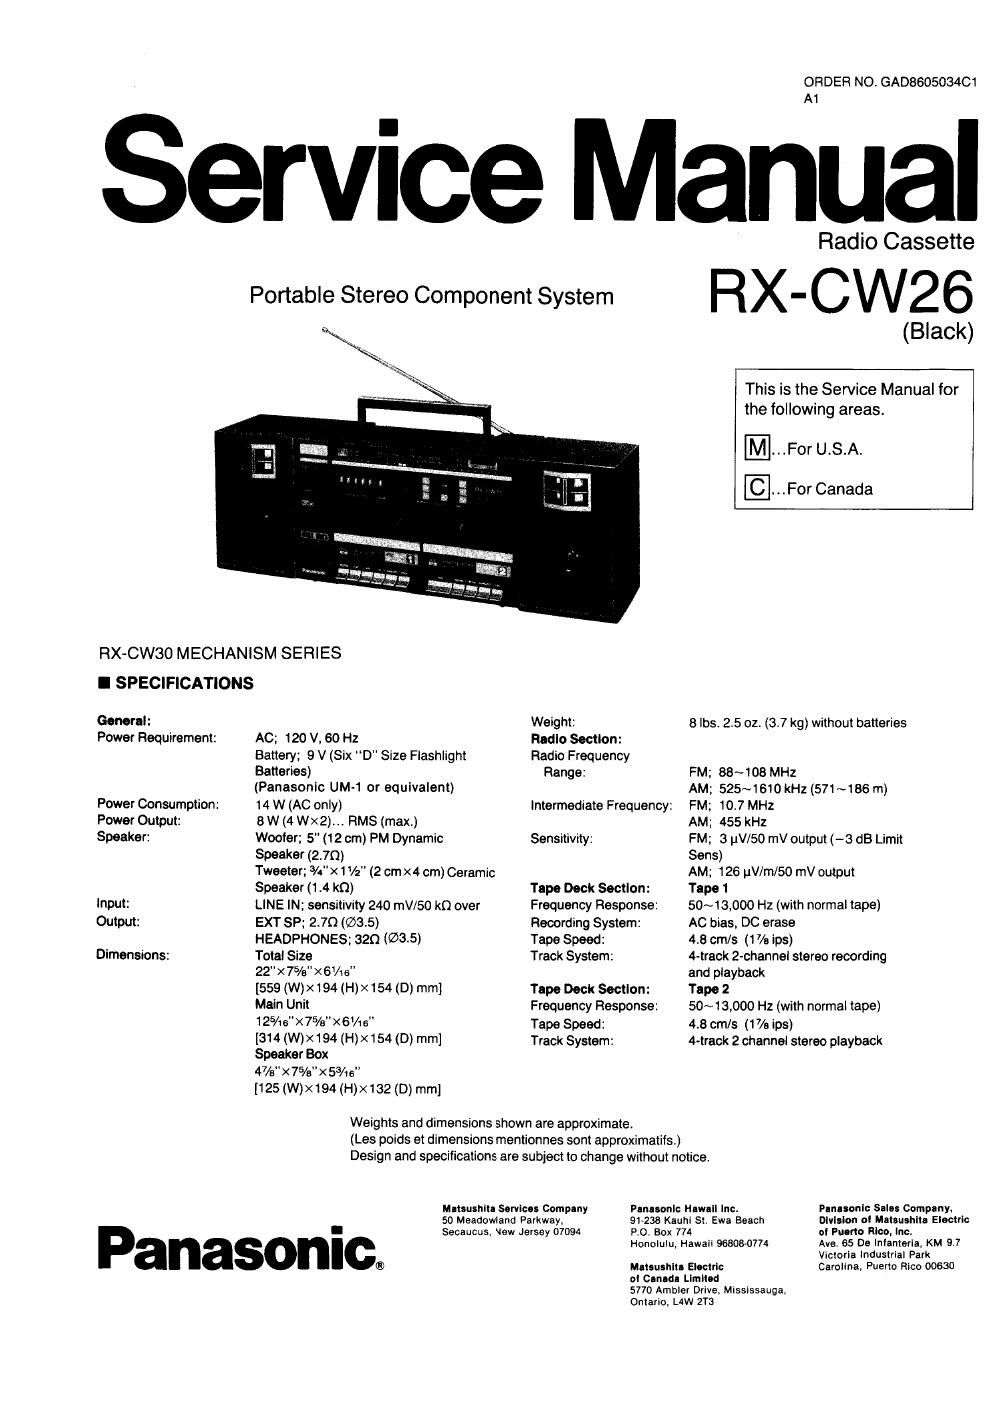 panasonic rx cw 26 service manual